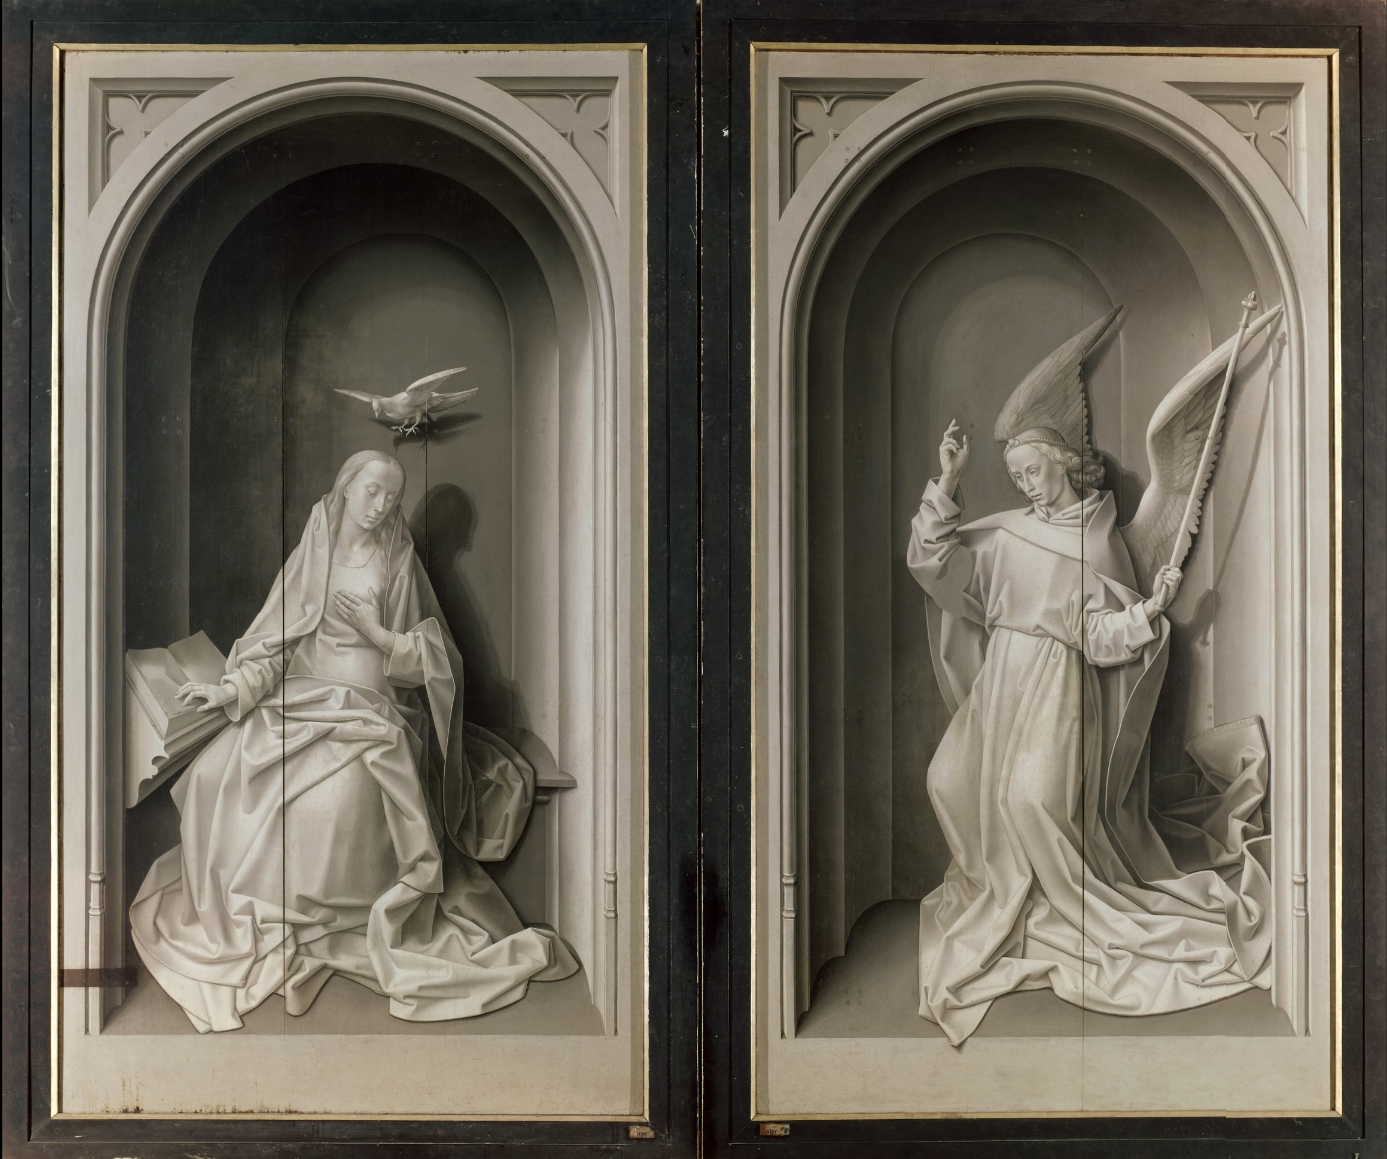 Hugo van der Goes, Portinari Altarpiece, closed, c. 1476, oil on wood, 274 x 652 cm when open (Uffizi)